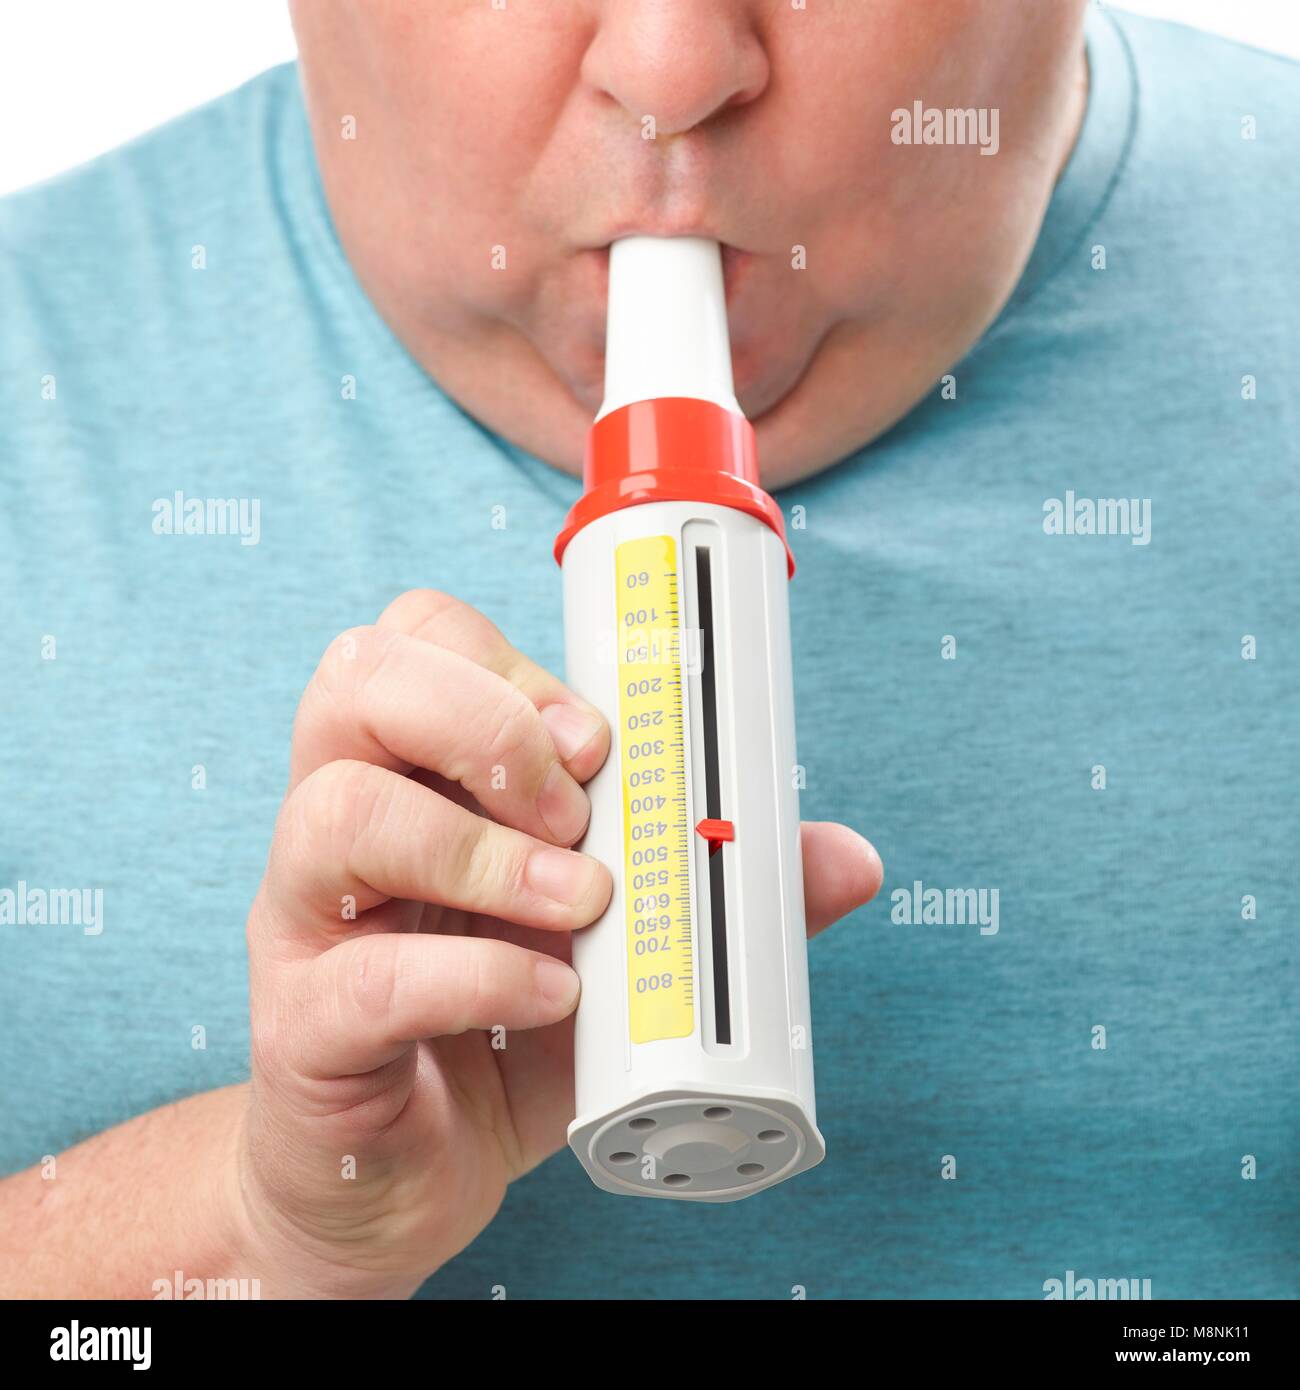 Overweight man using a peak flow metre. Stock Photo